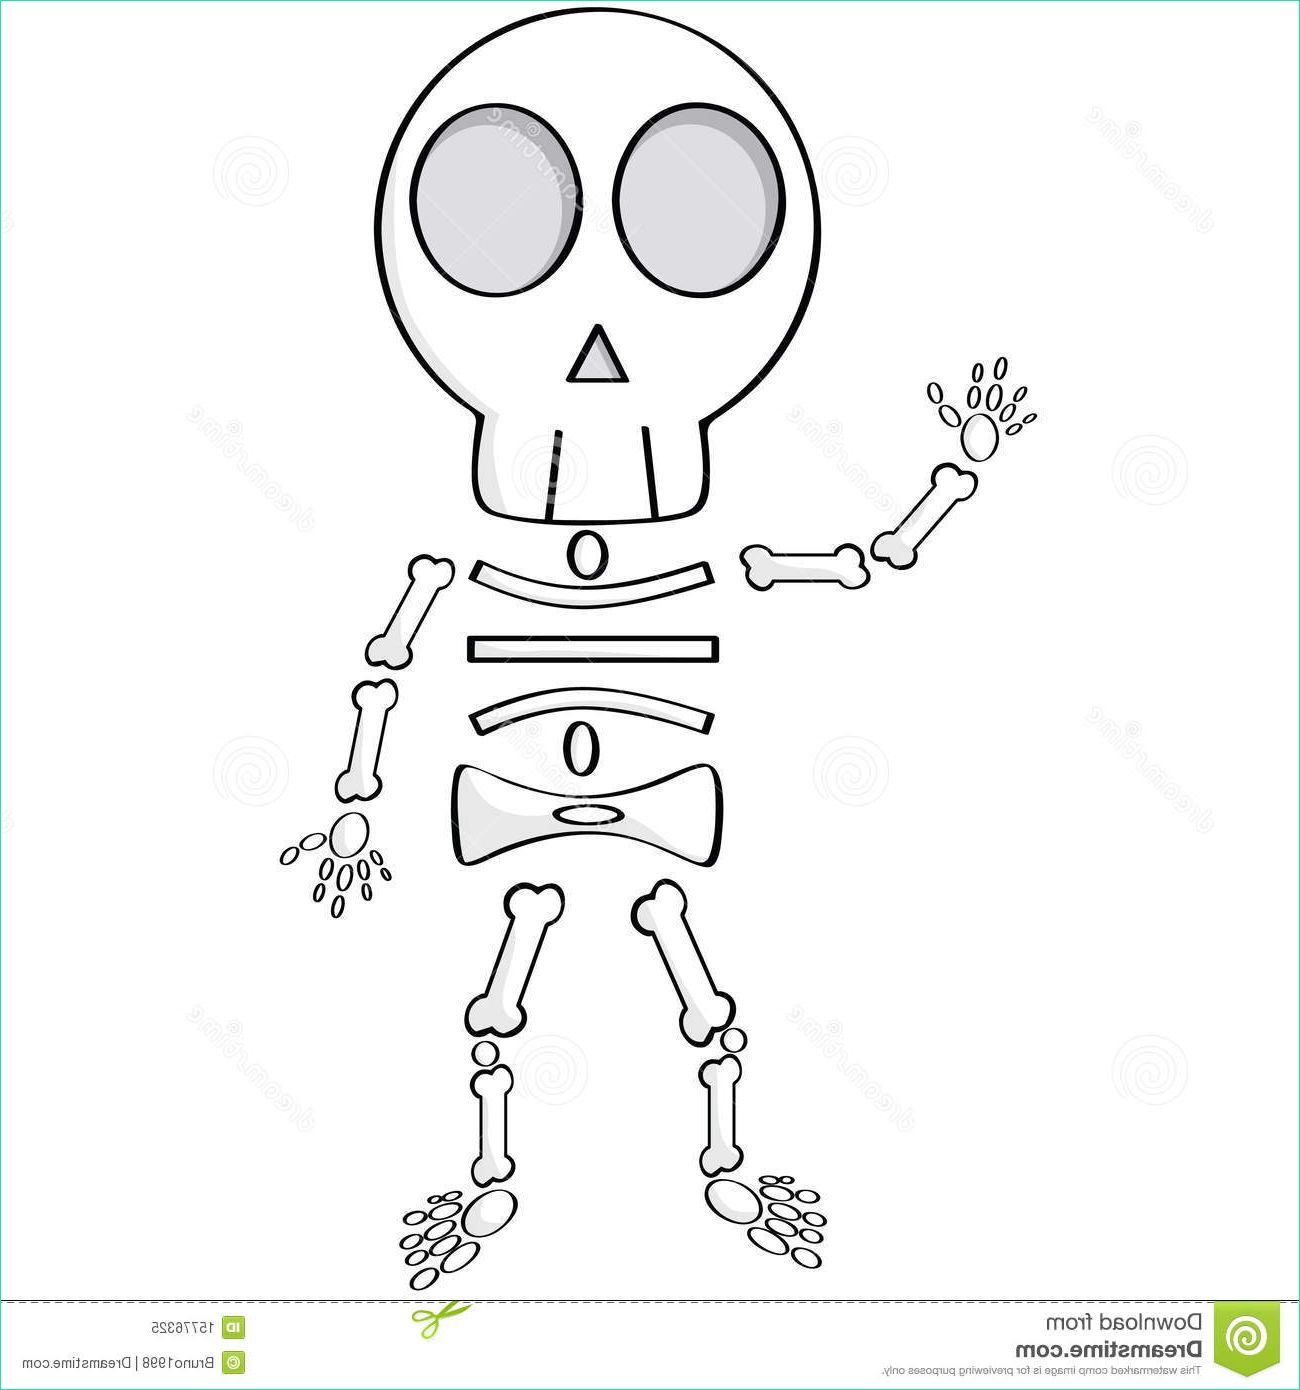 Dessin Halloween Squelette Élégant Image Cartoon Skeleton Royalty Free Stock Image